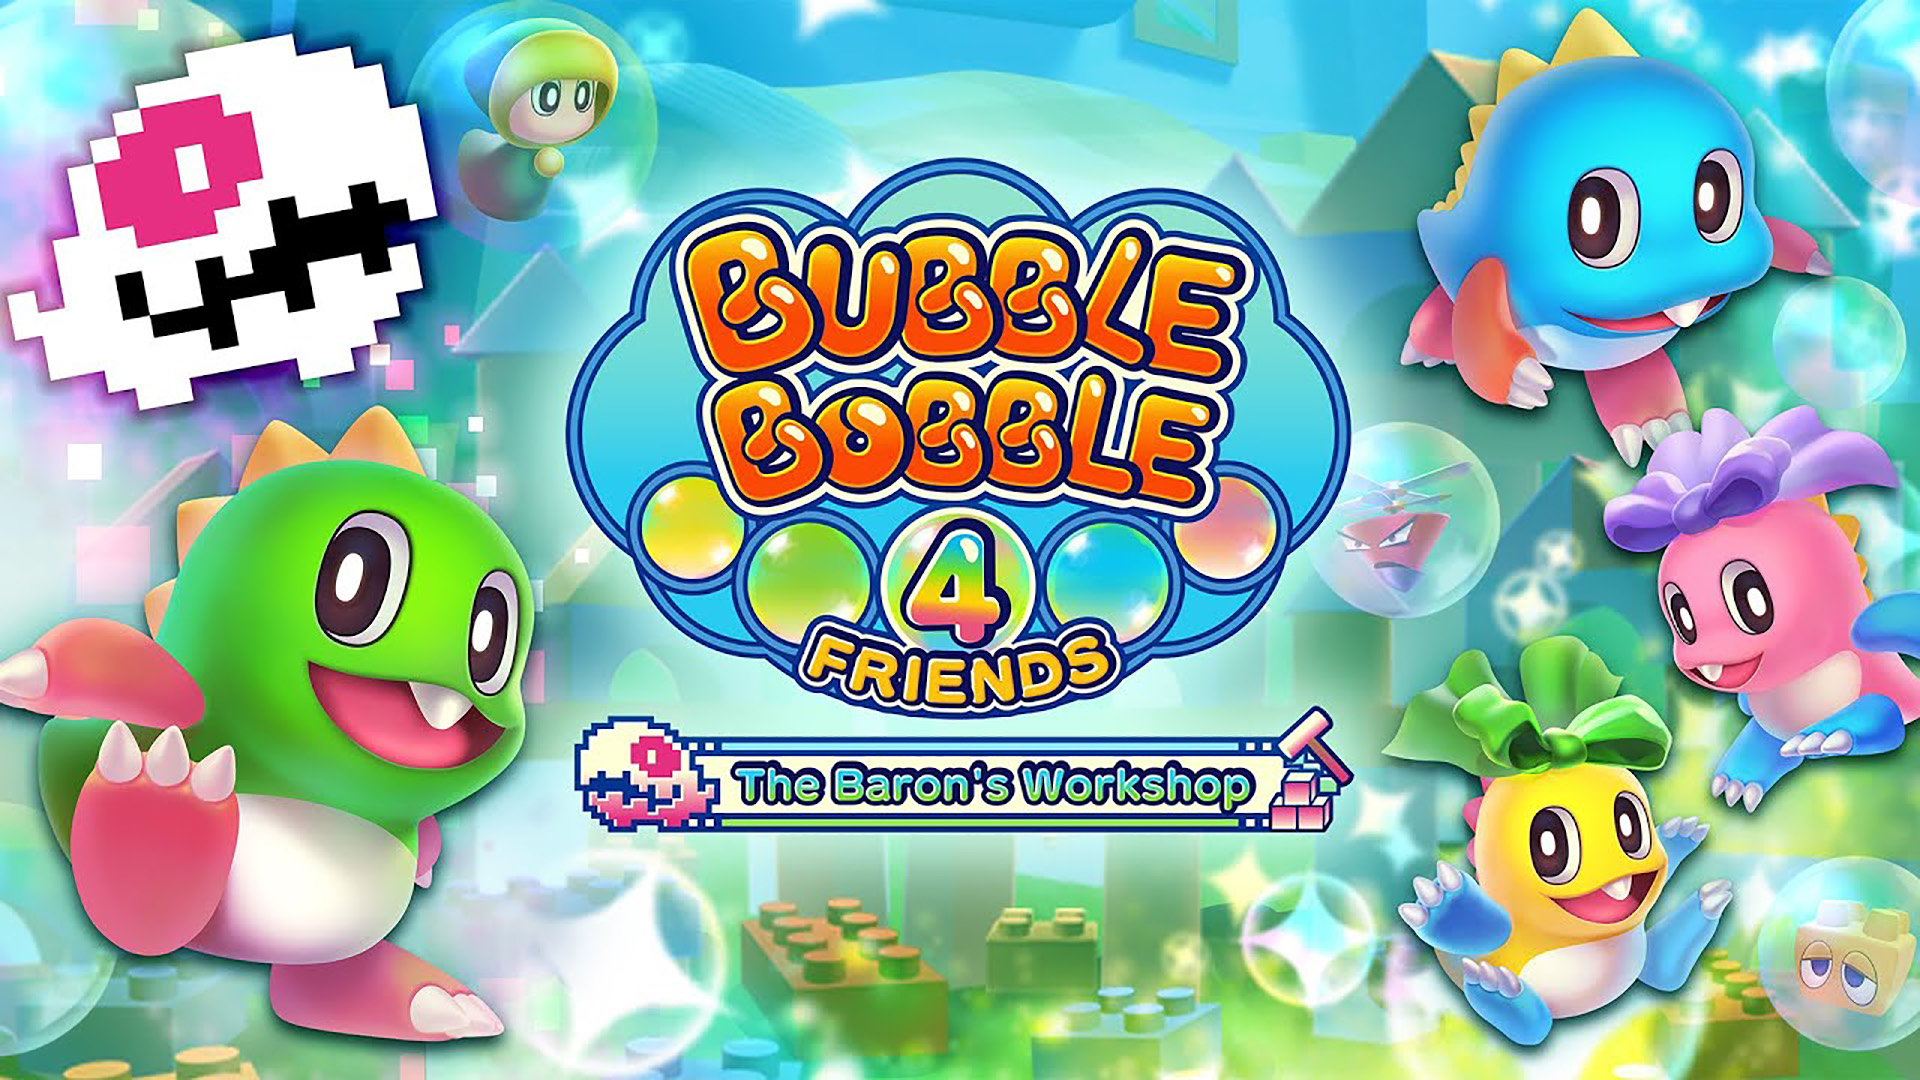 Bubble Bobble 4 Friends เวอร์ชัน PC จะมีโหมด Workshop